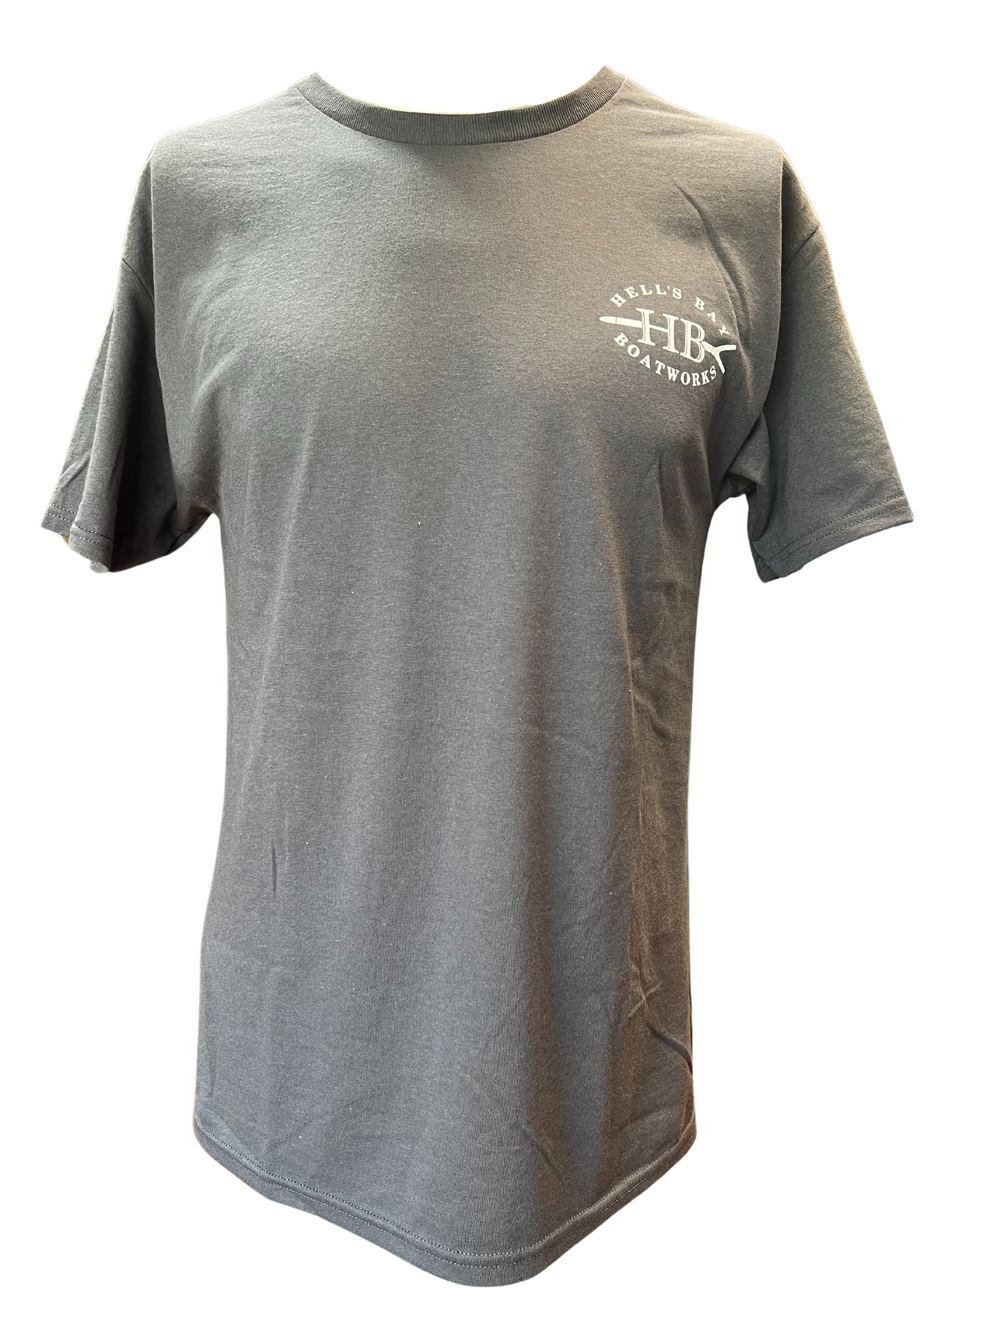 HB Logo Cotton S/S t-shirt - Charcoal Grey